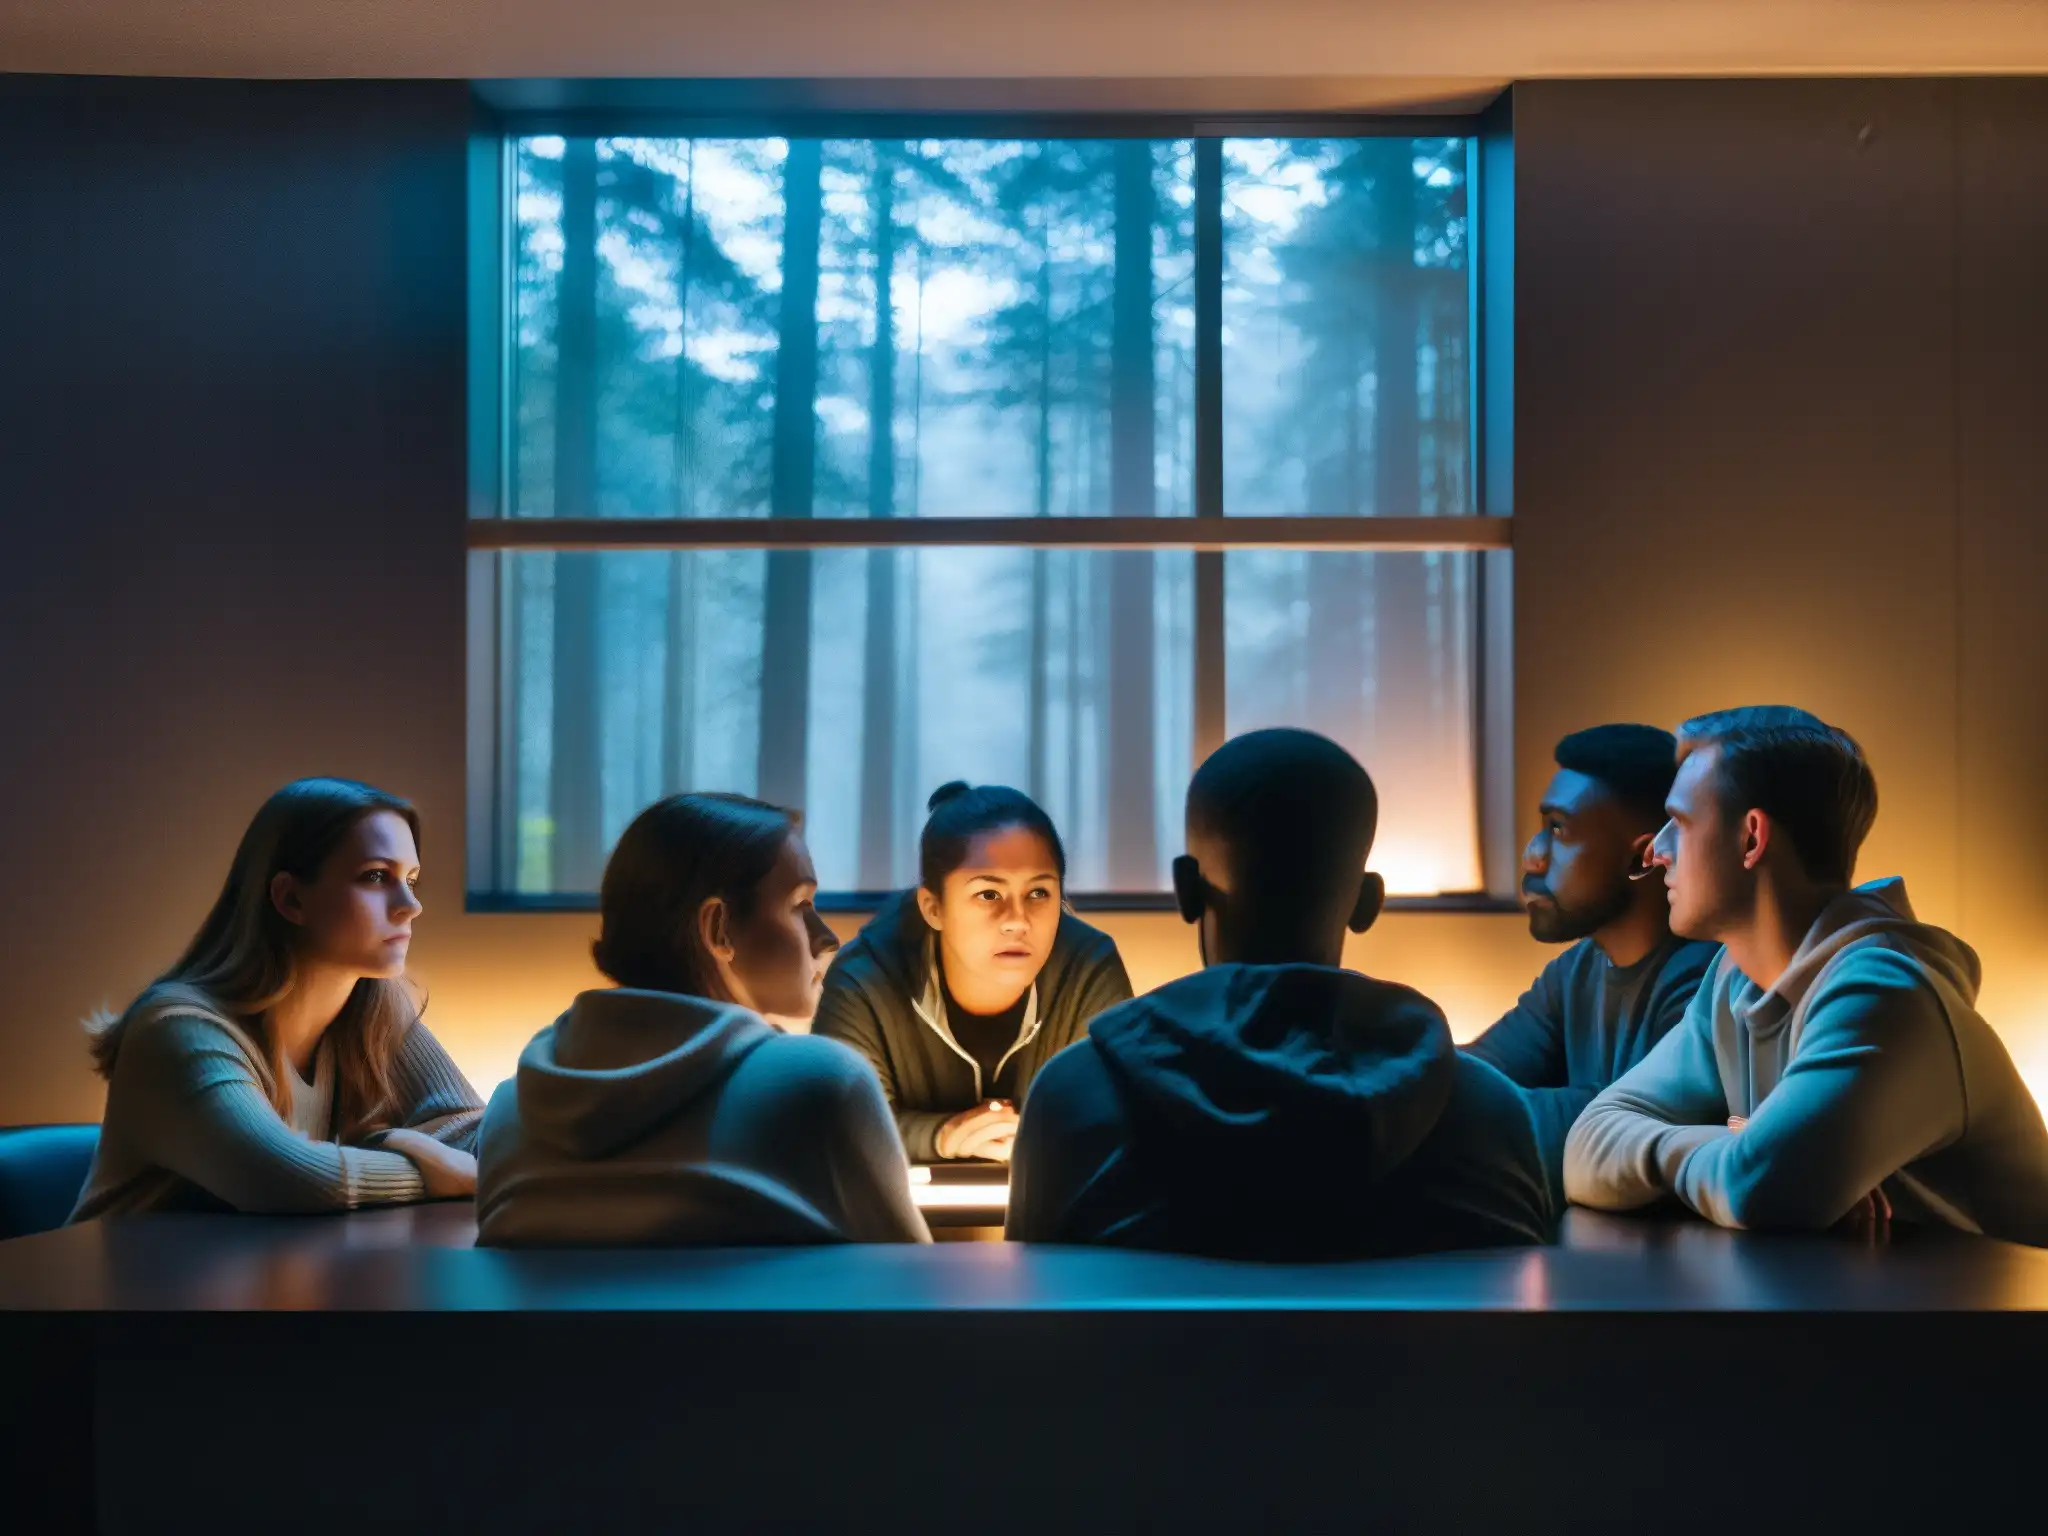 Un grupo tenso de personas en una habitación oscura, con caras iluminadas por pantallas de computadora